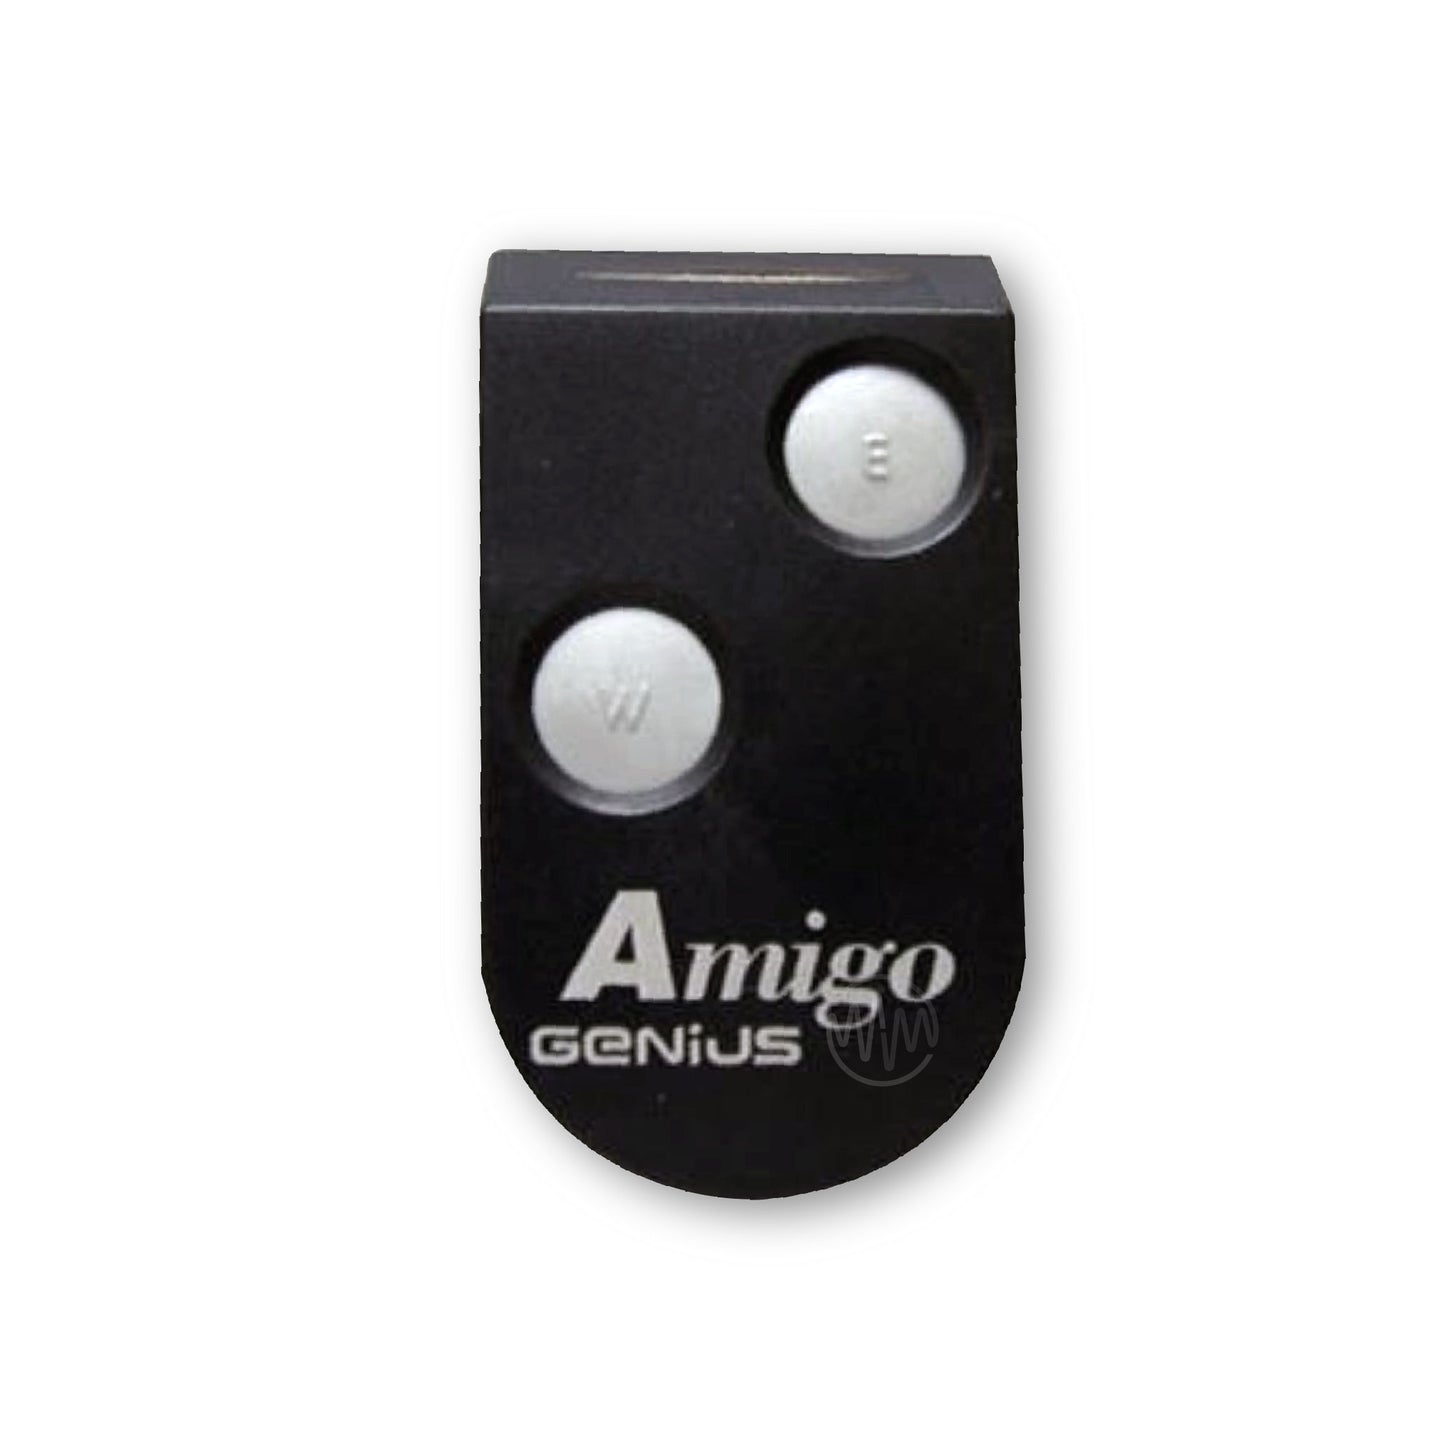 Genius Amigo JA332 868 Garage & Gate Remote